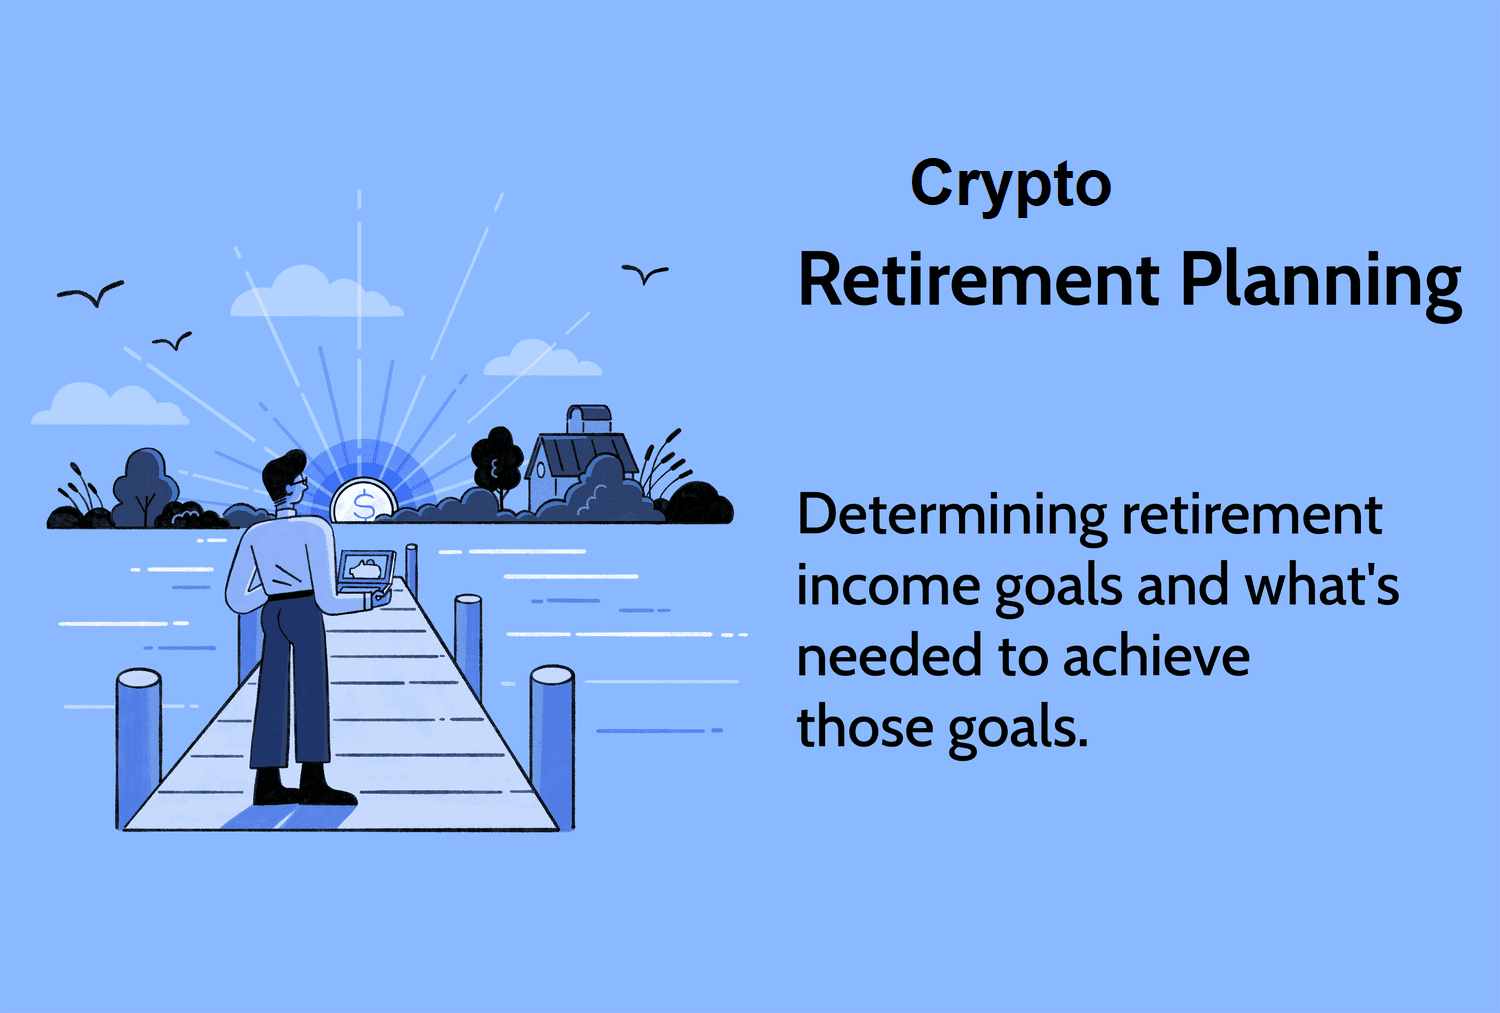 Crypto retirement planning explained